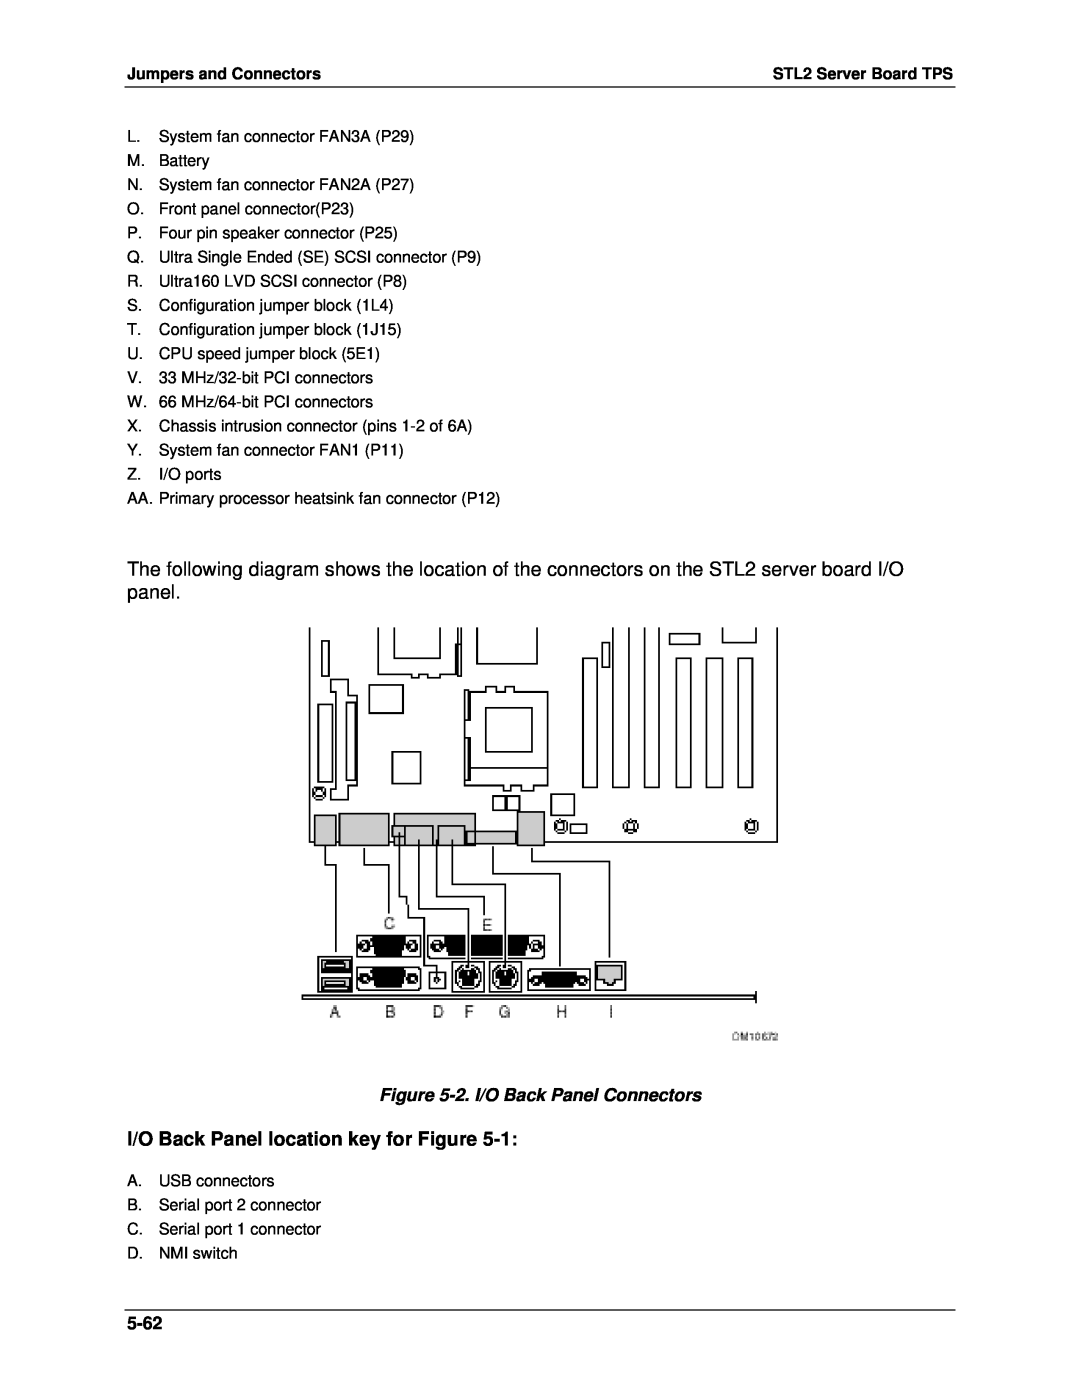 Intel STL2 manual I/O Back Panel location key for Figure, 2.I/O Back Panel Connectors, 5-62 